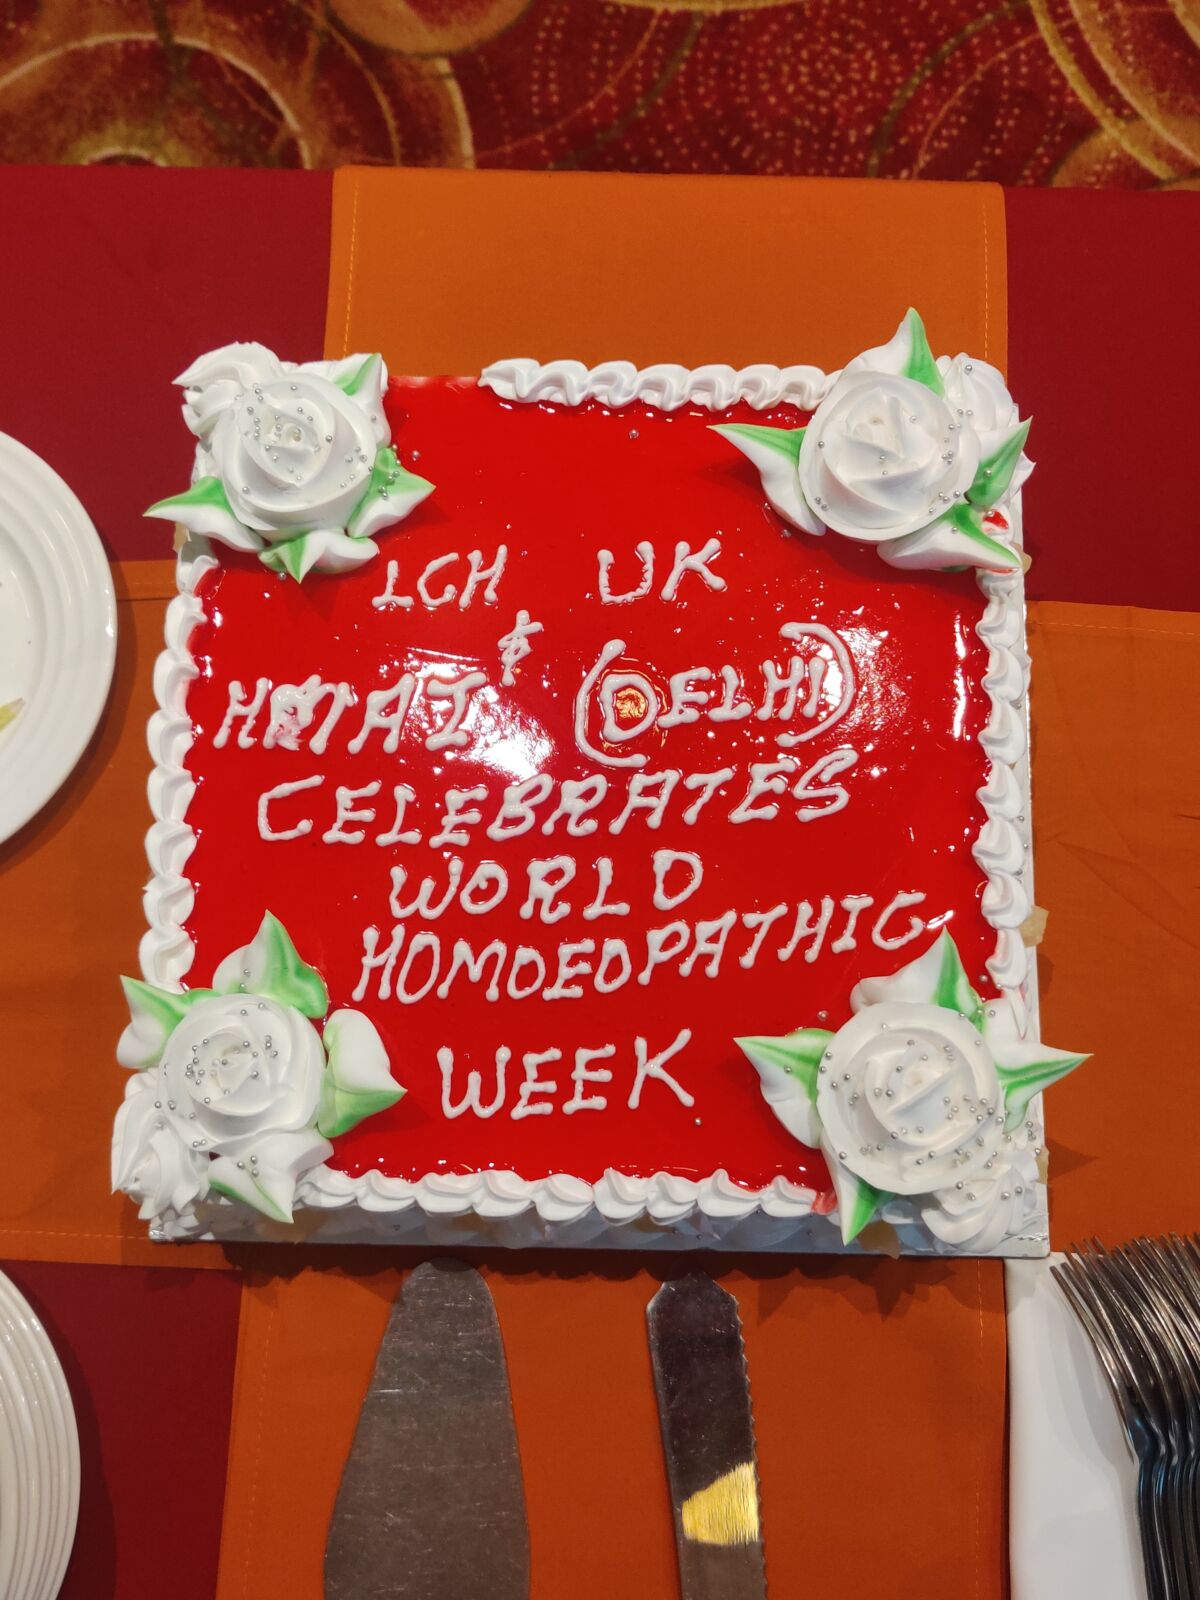 World Homeopathy Awareness Week Celebrations by LCH UK at INDIA